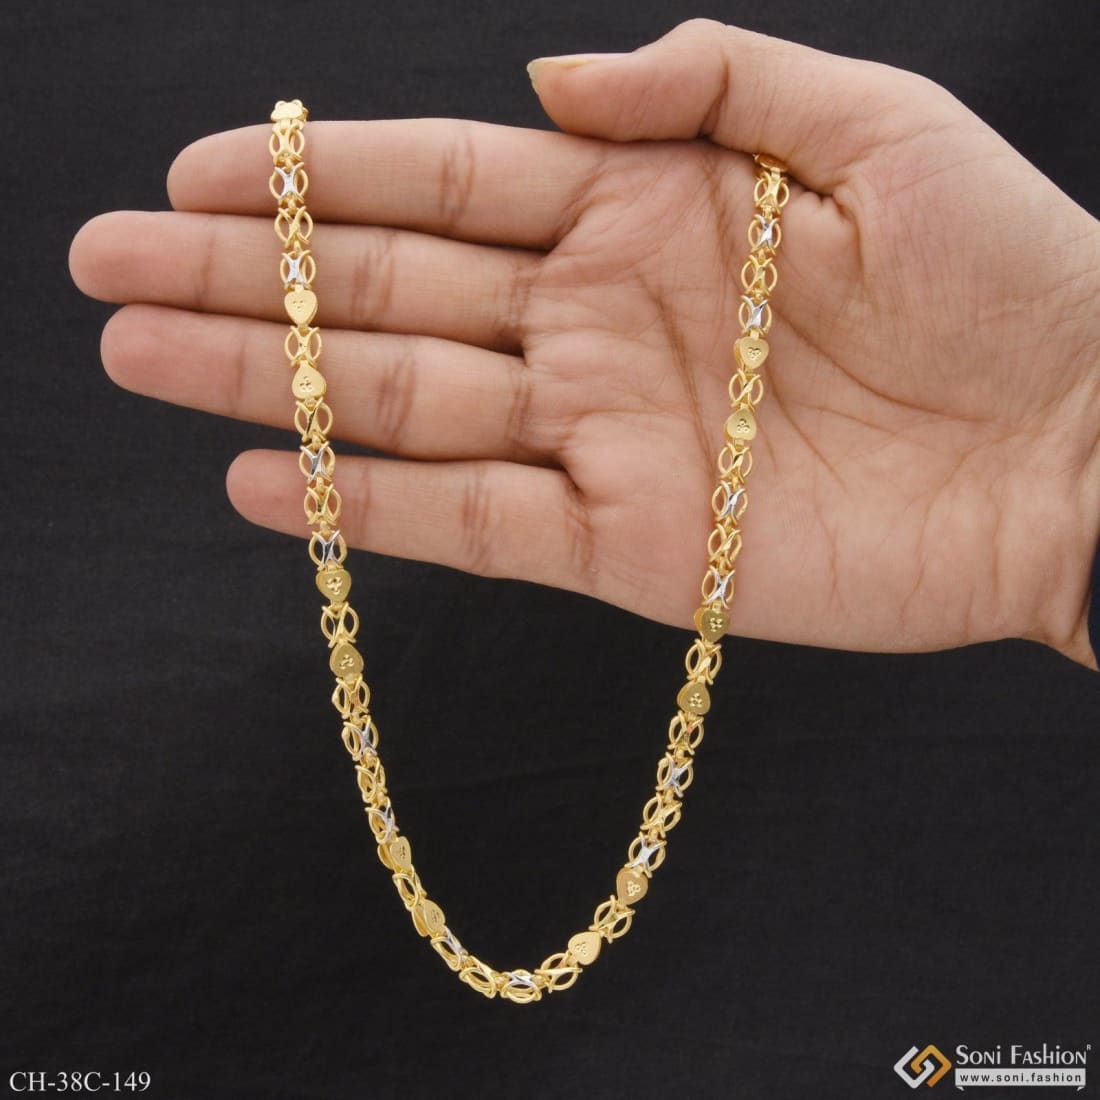 1 Gram Gold Forming Heart Shape Sophisticated Design Chain for Men